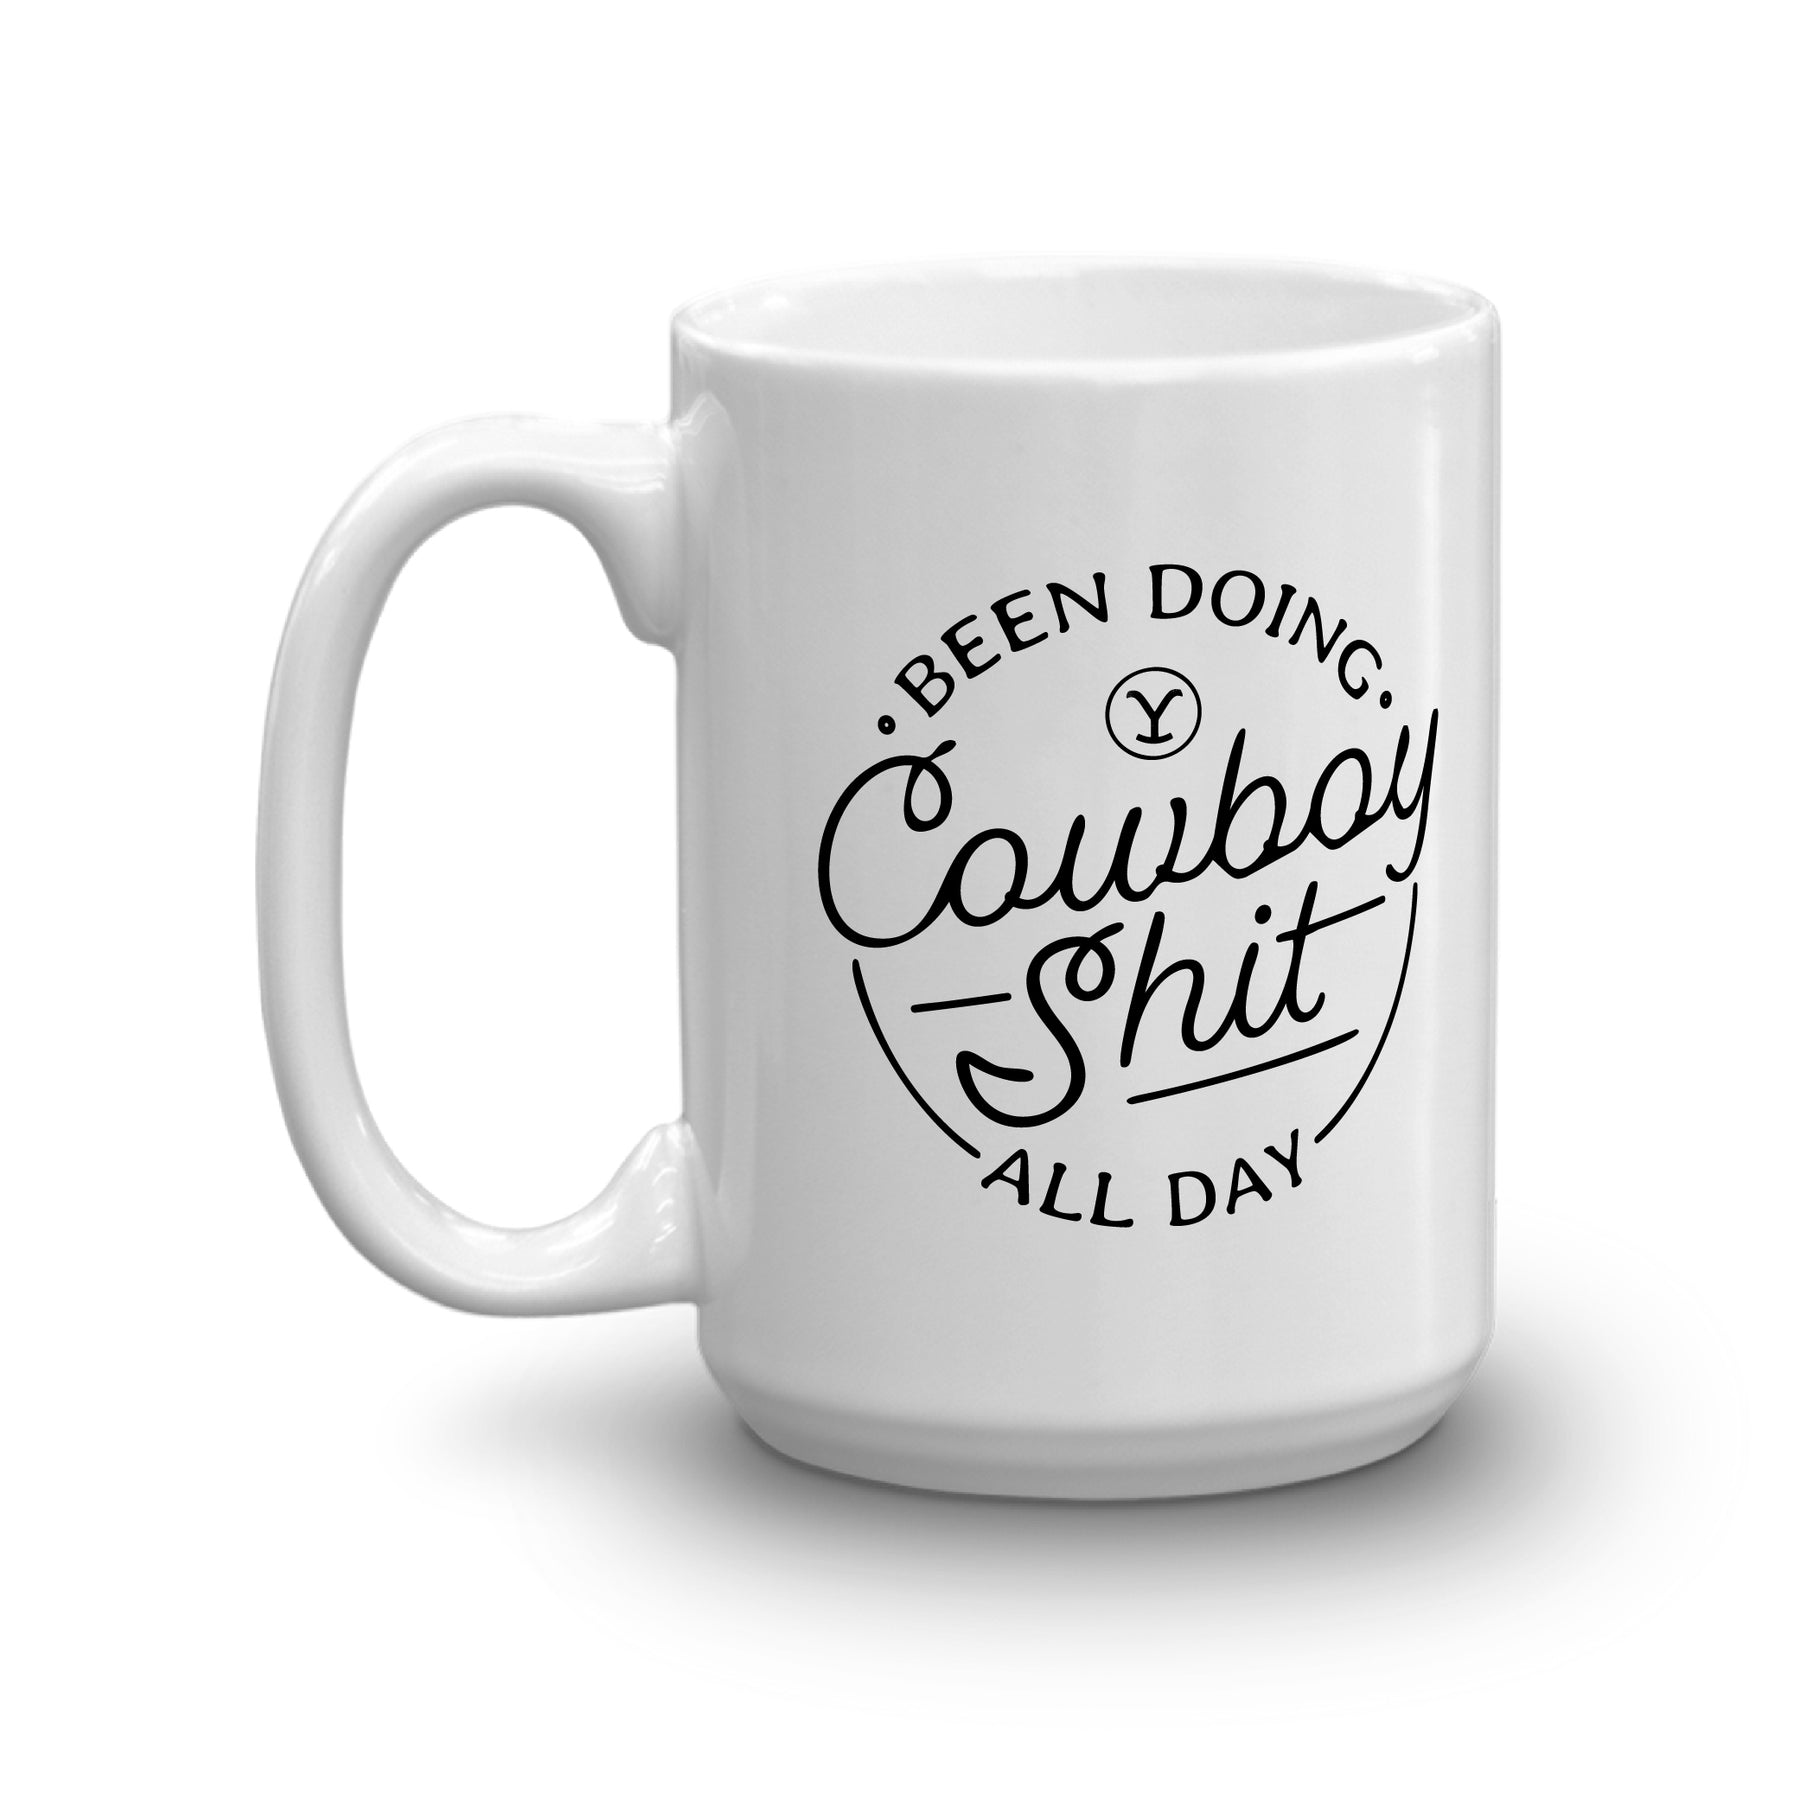 Cowboys n' Coffee Mug – Ranch House Coffee LLC